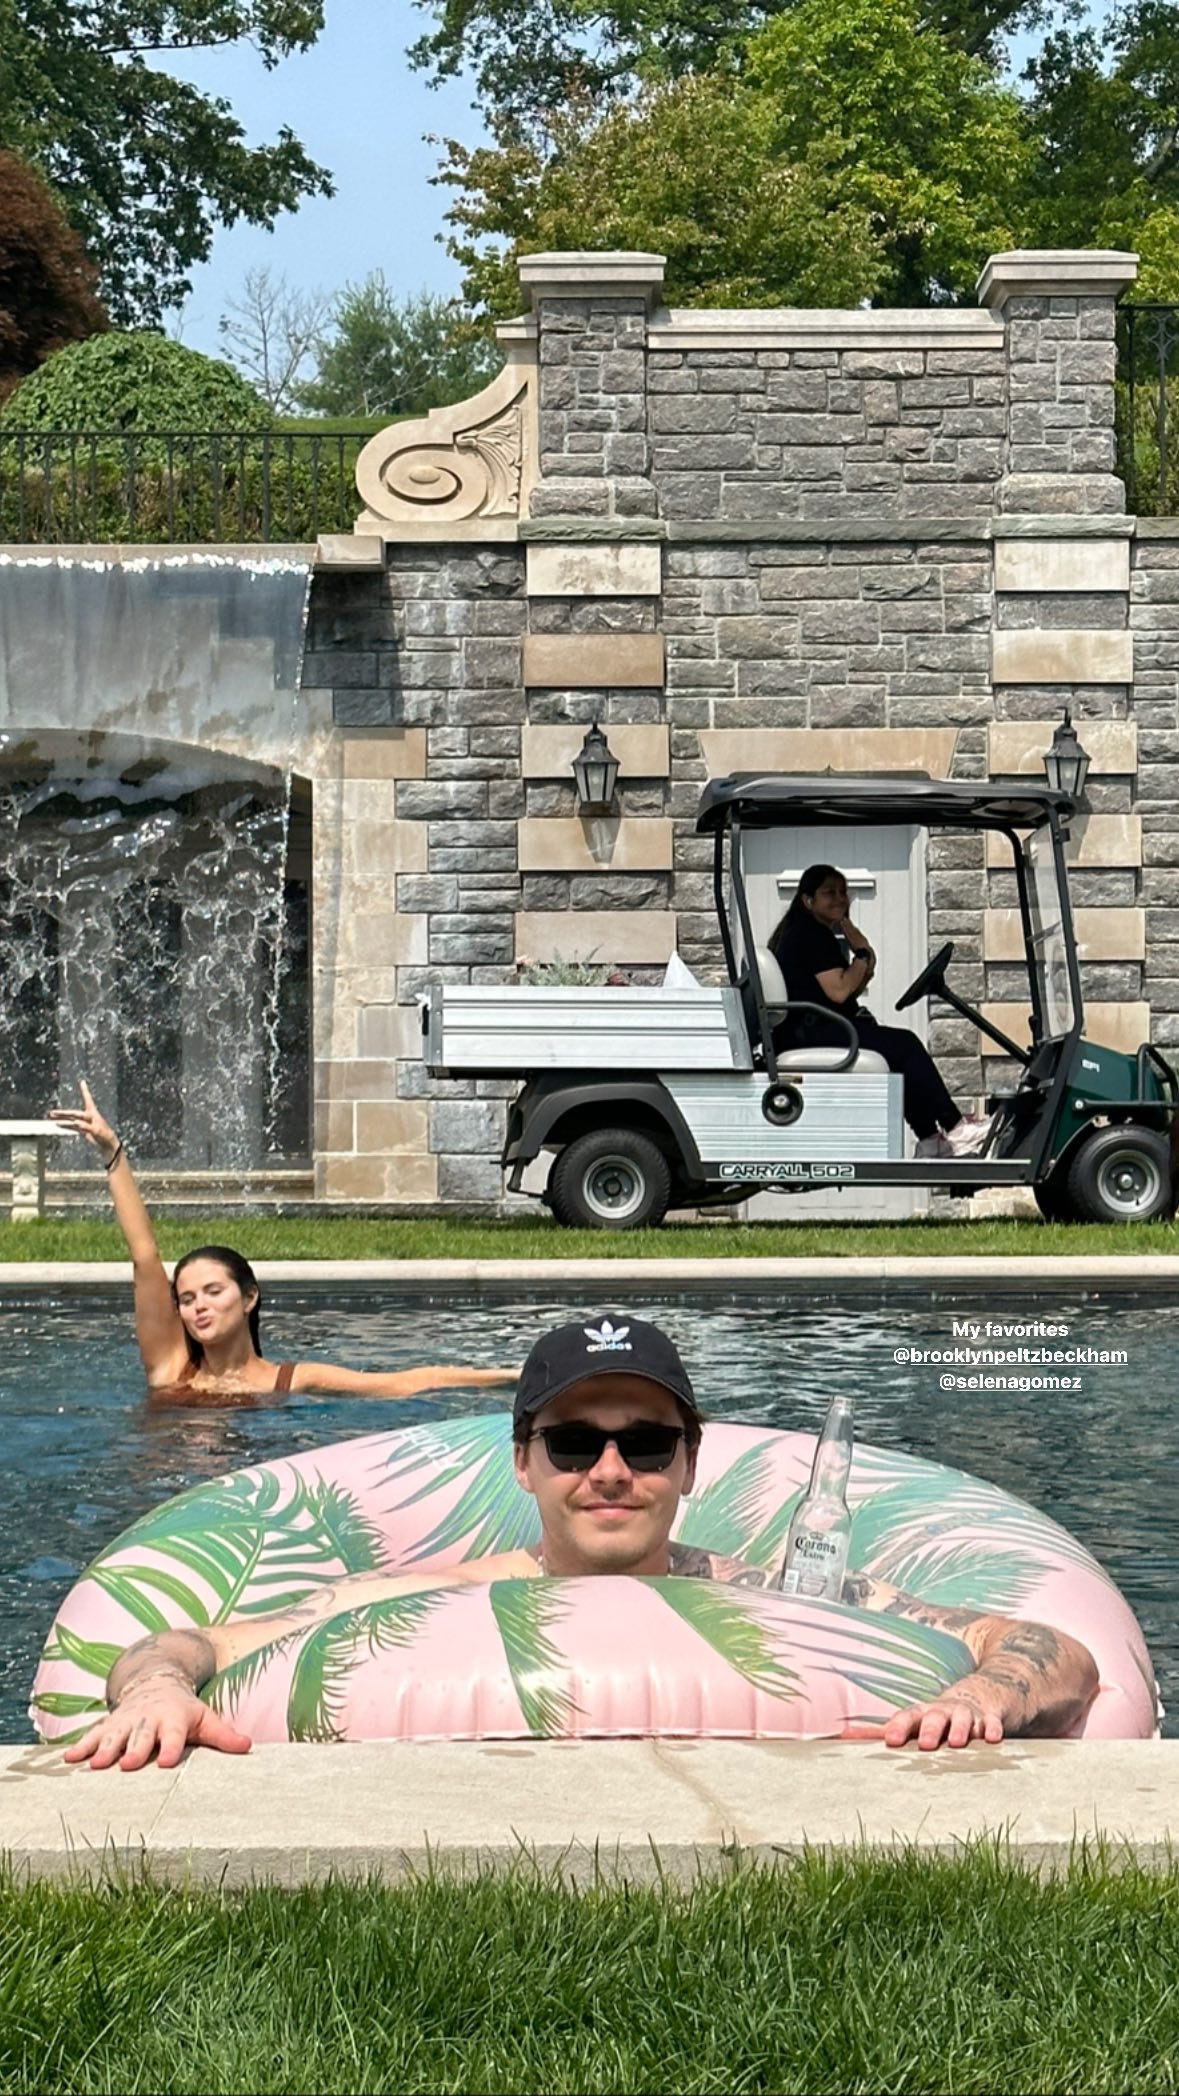 Selena Gomez Rocks the Boat in a Pink Bikini! - Photo 30